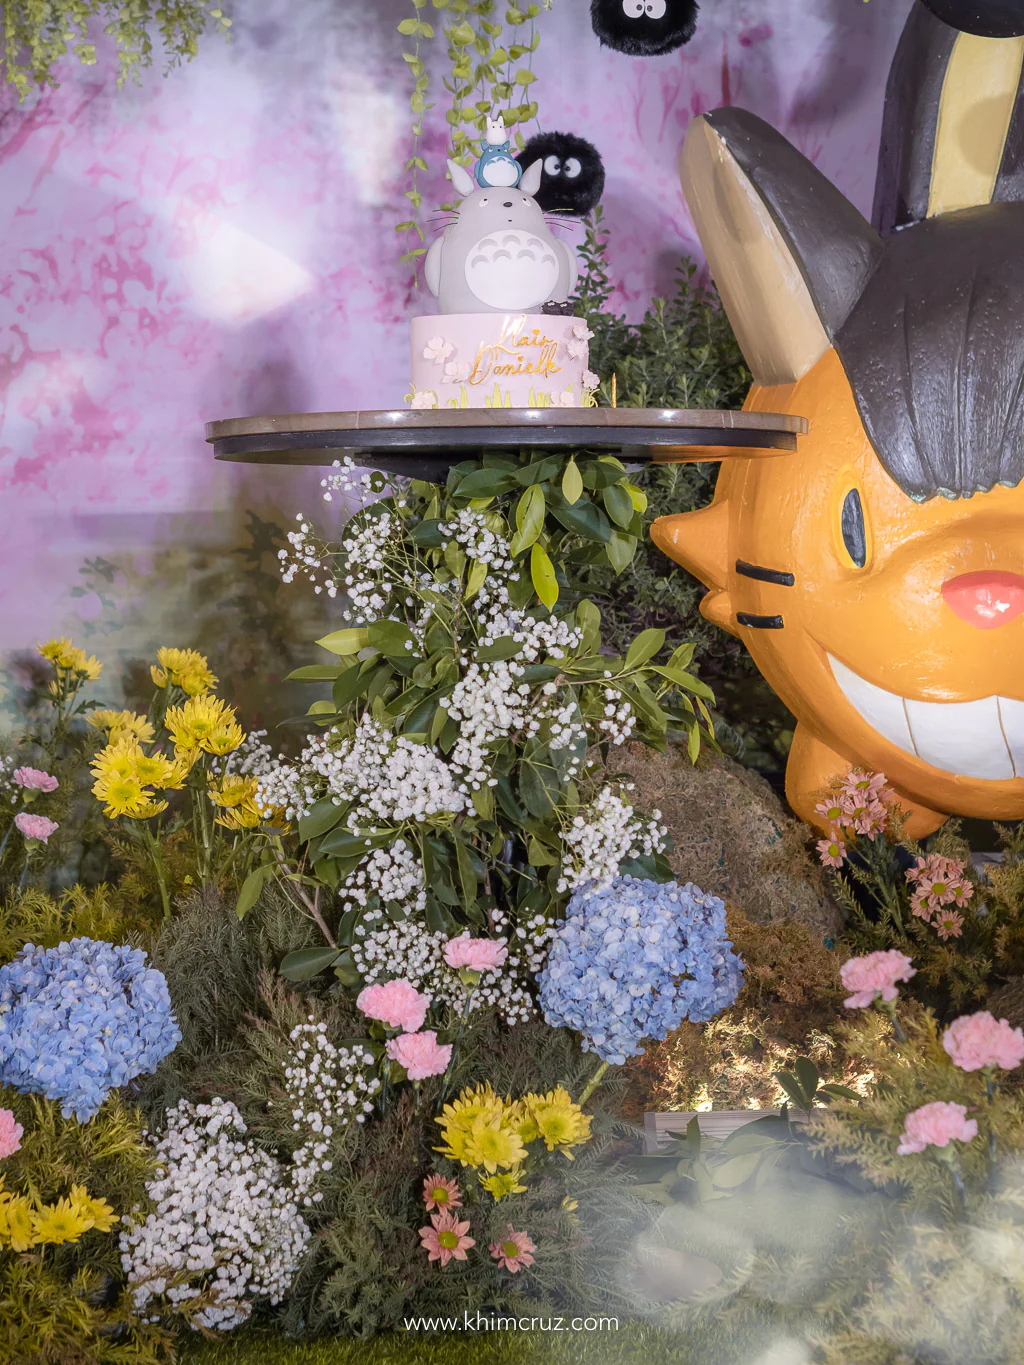 Totoro-themed birthday cake